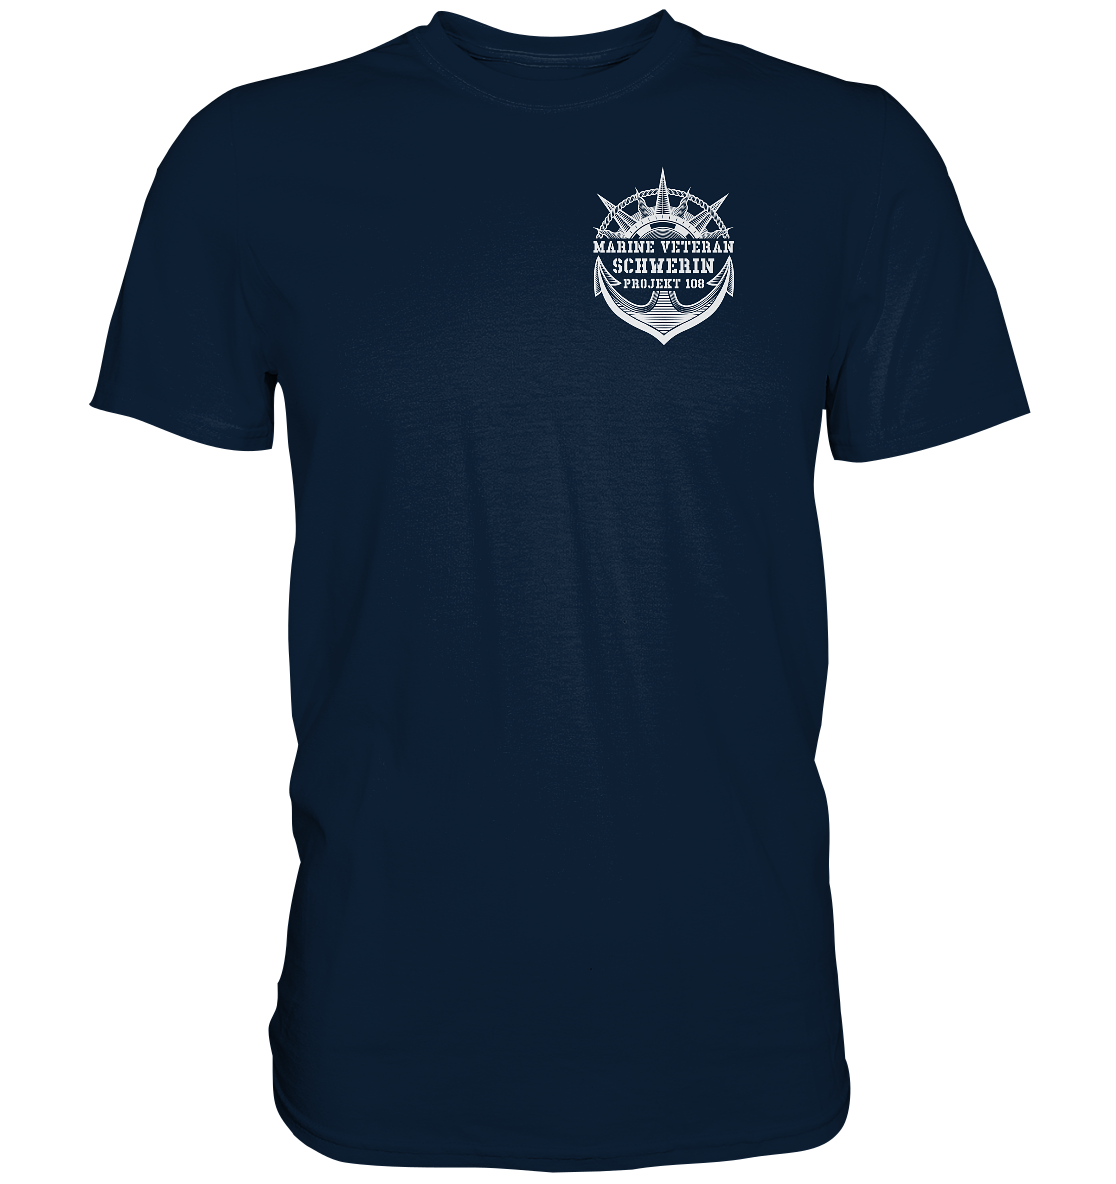 Projekt 108 SCHWERIN Marine Veteran Brustlogo  - Premium Shirt